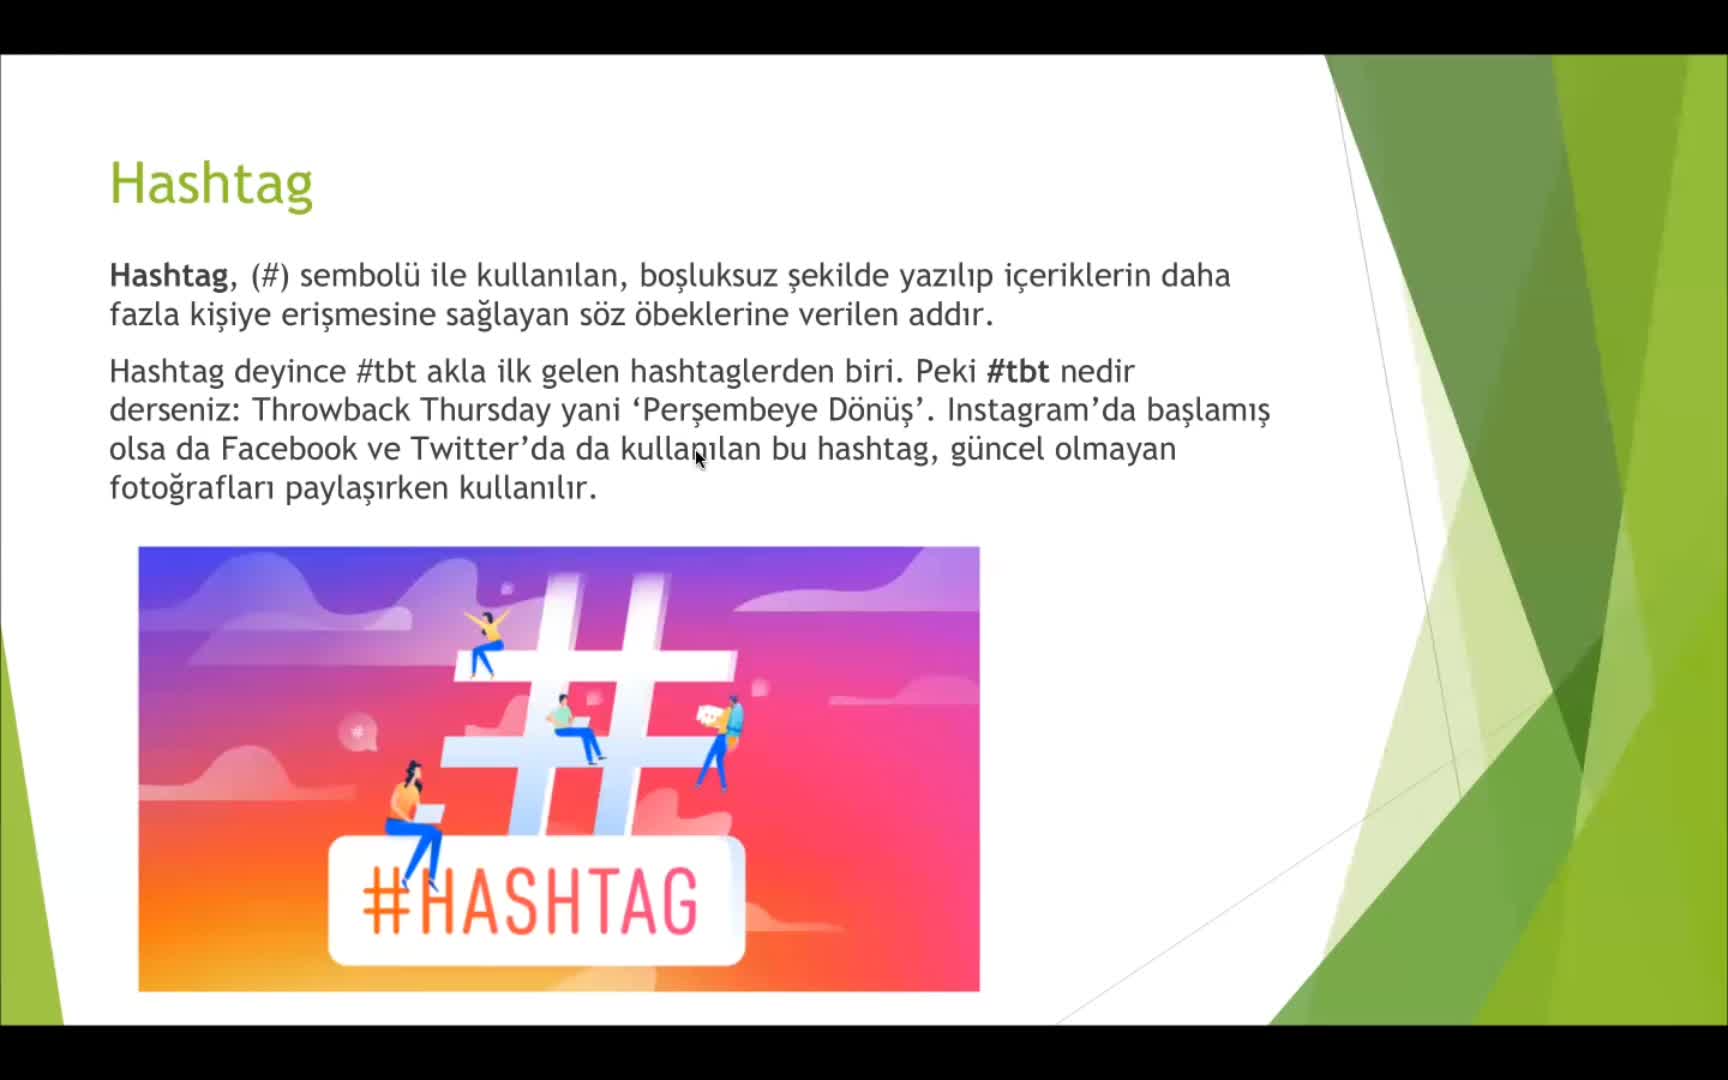 4- Hashtag